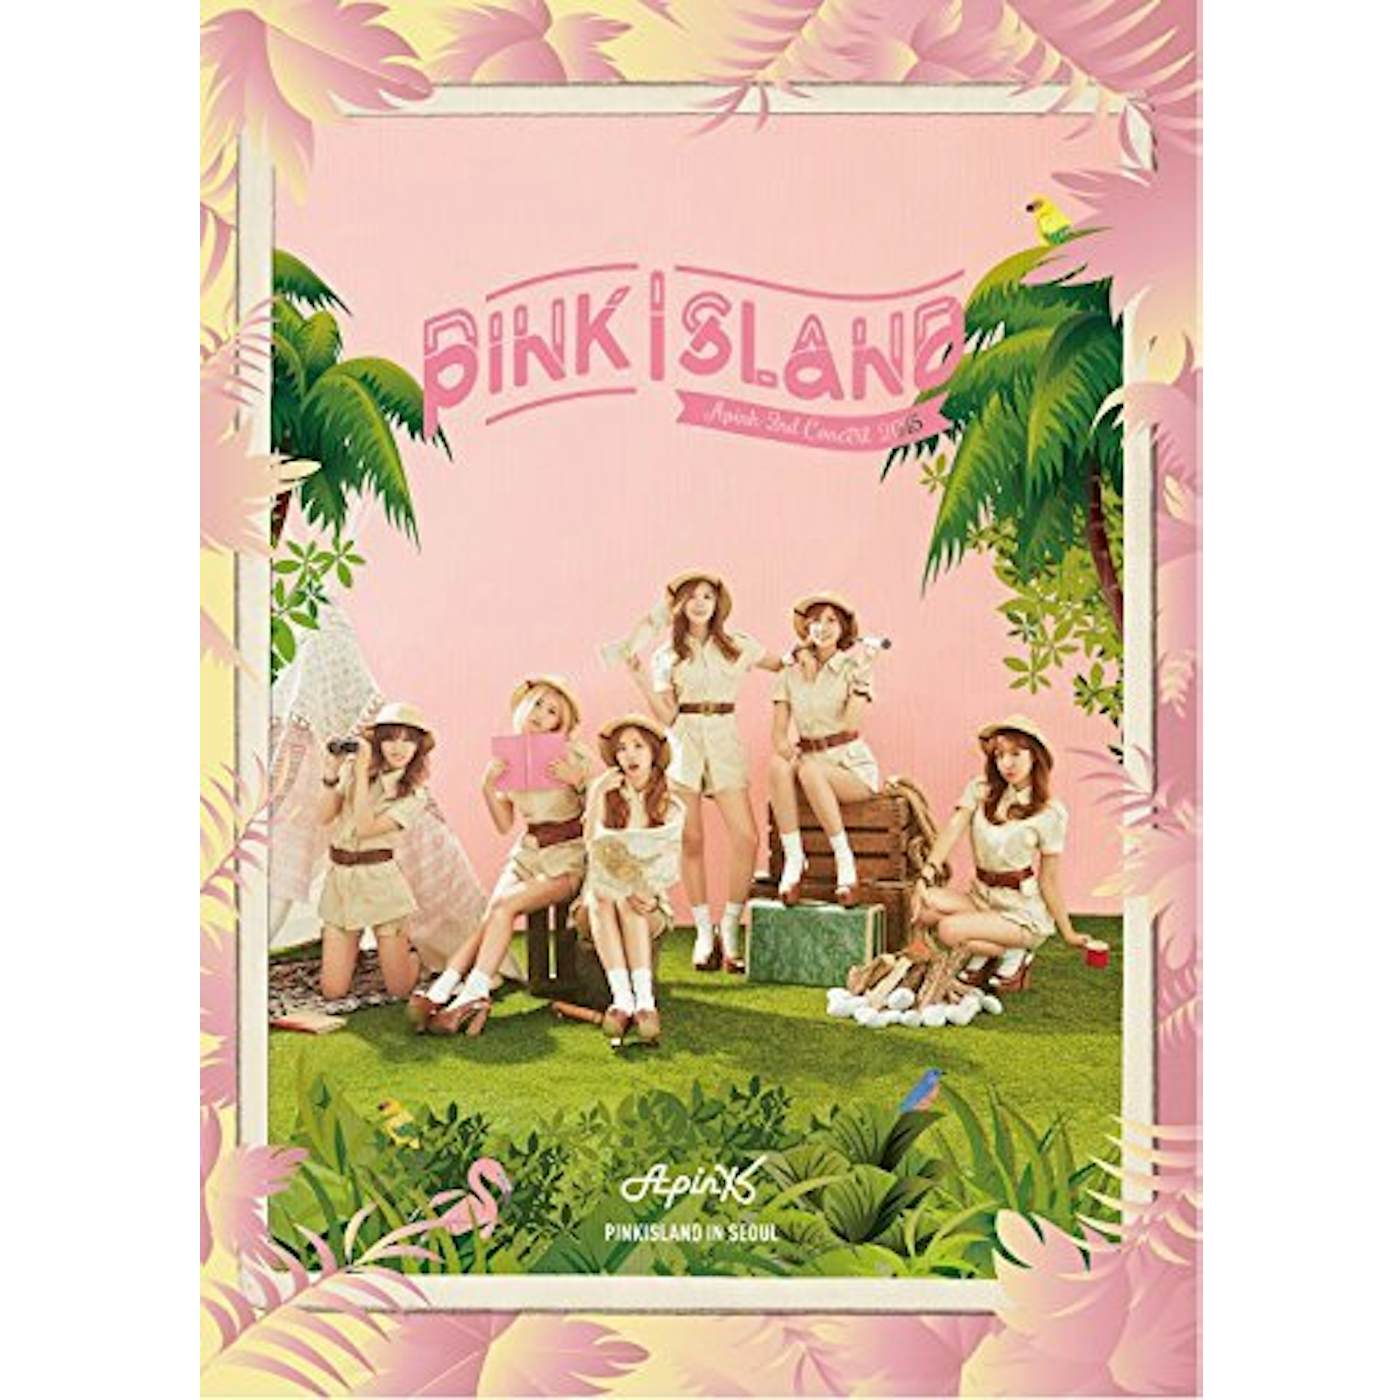 Apink 2ND CONCERT DVD (PINK ISLAND) DVD